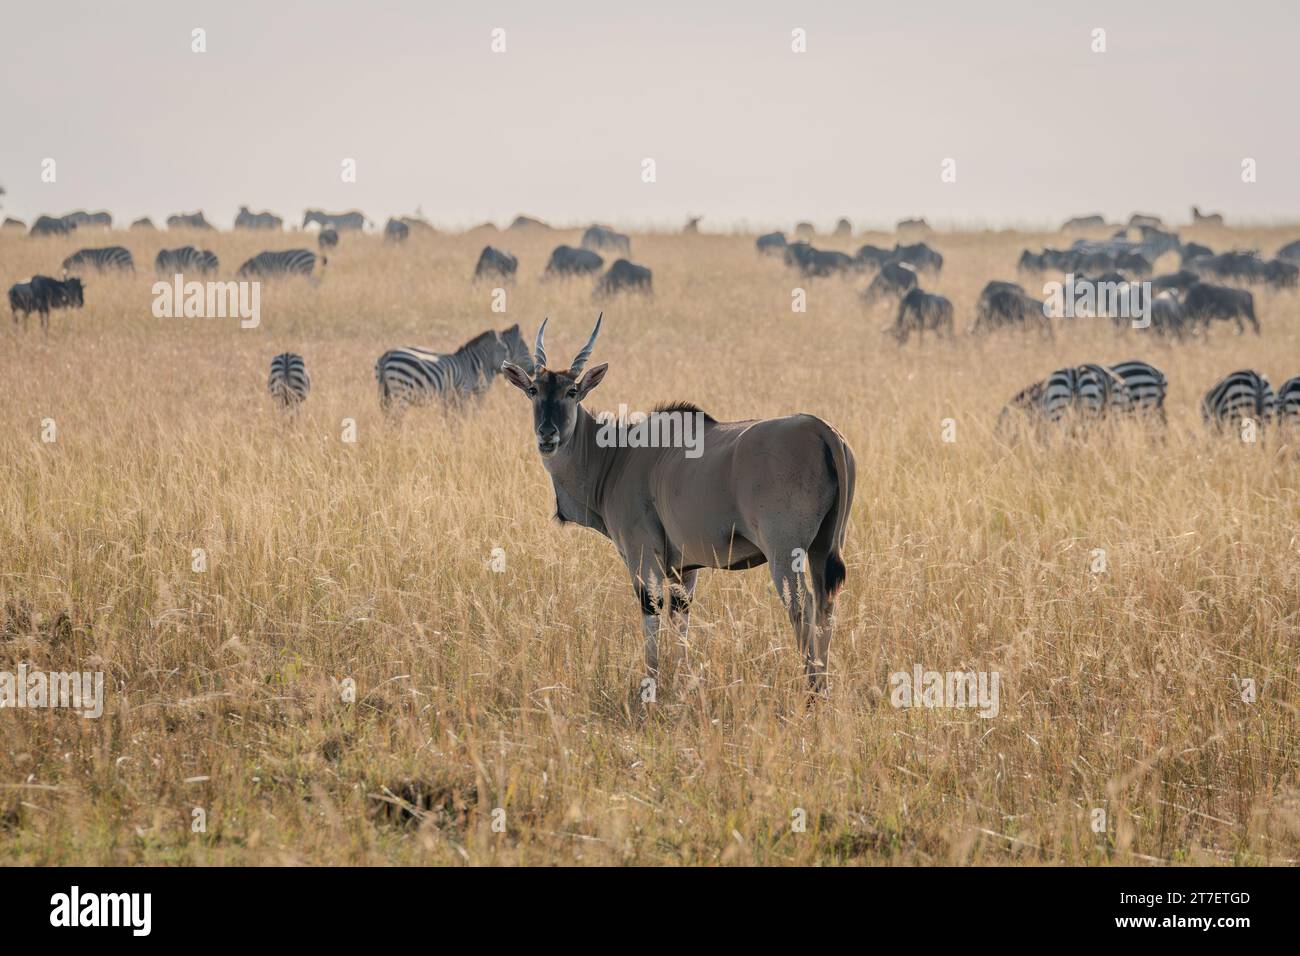 Giant Eland Antelopes in Masai Mara Kenya Africa Stock Photo